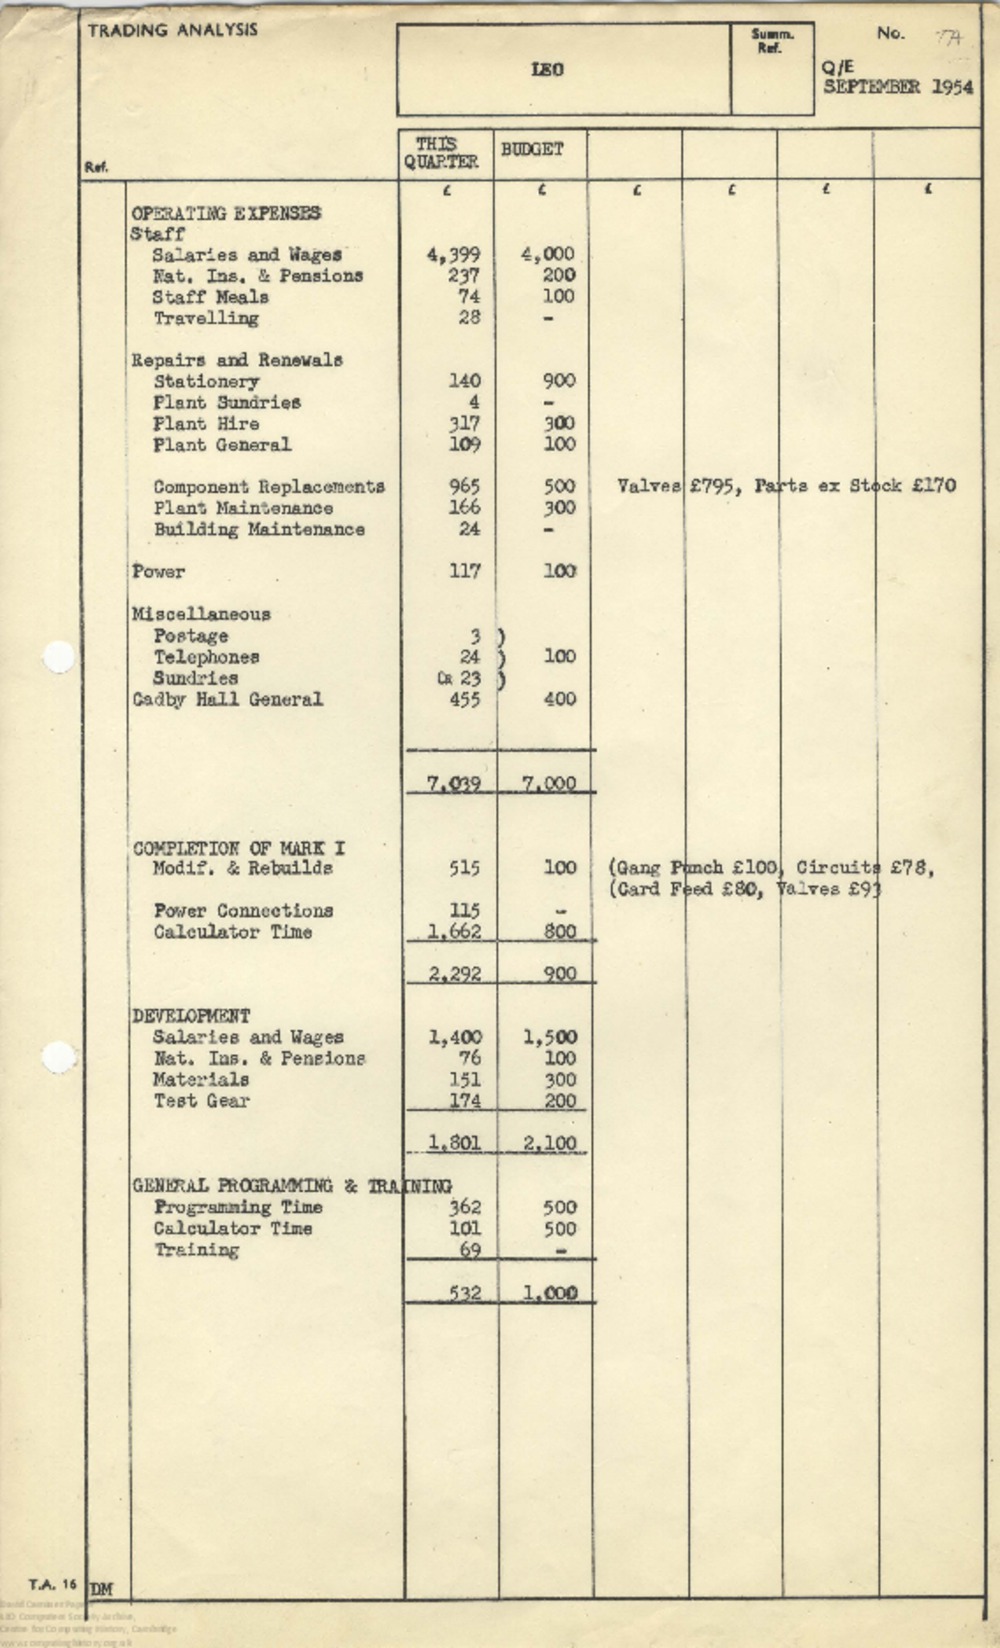 Article: 63027 September 1954 Quarter End - Trading Analysis